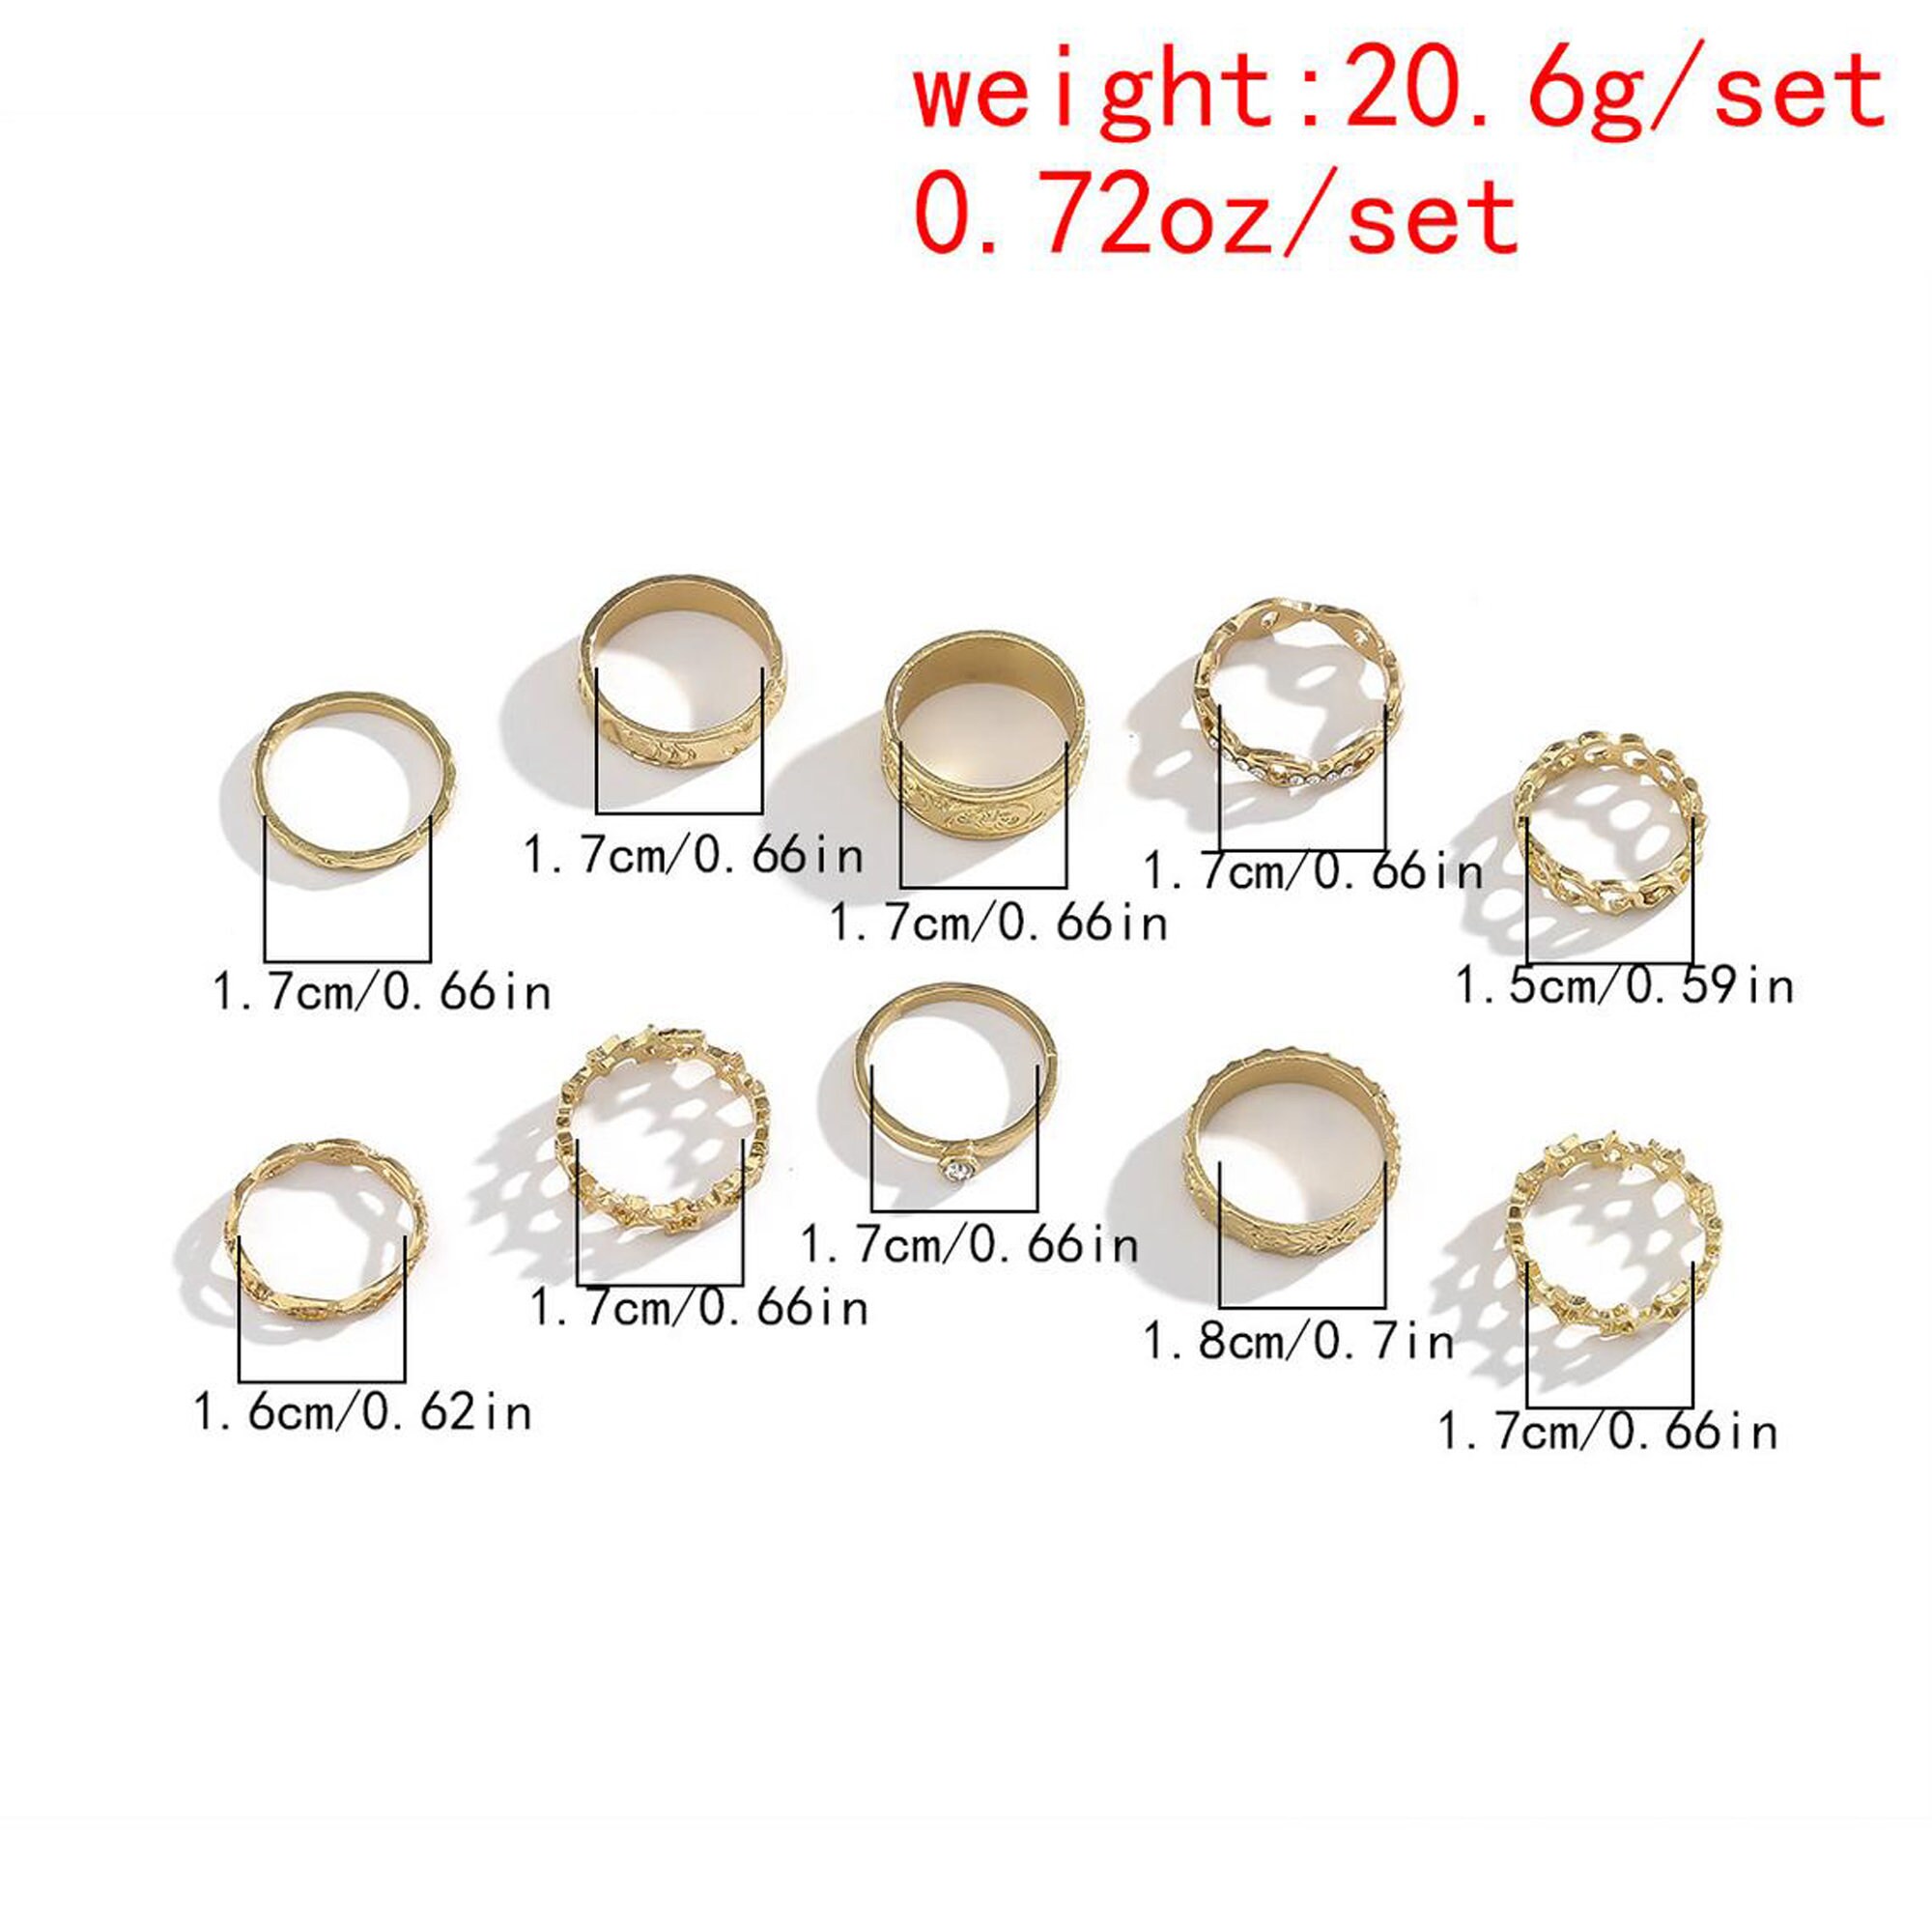 10 Unique Piece Chic 14K Gold Tone Metal Ring Set Boho Ring | Etsy